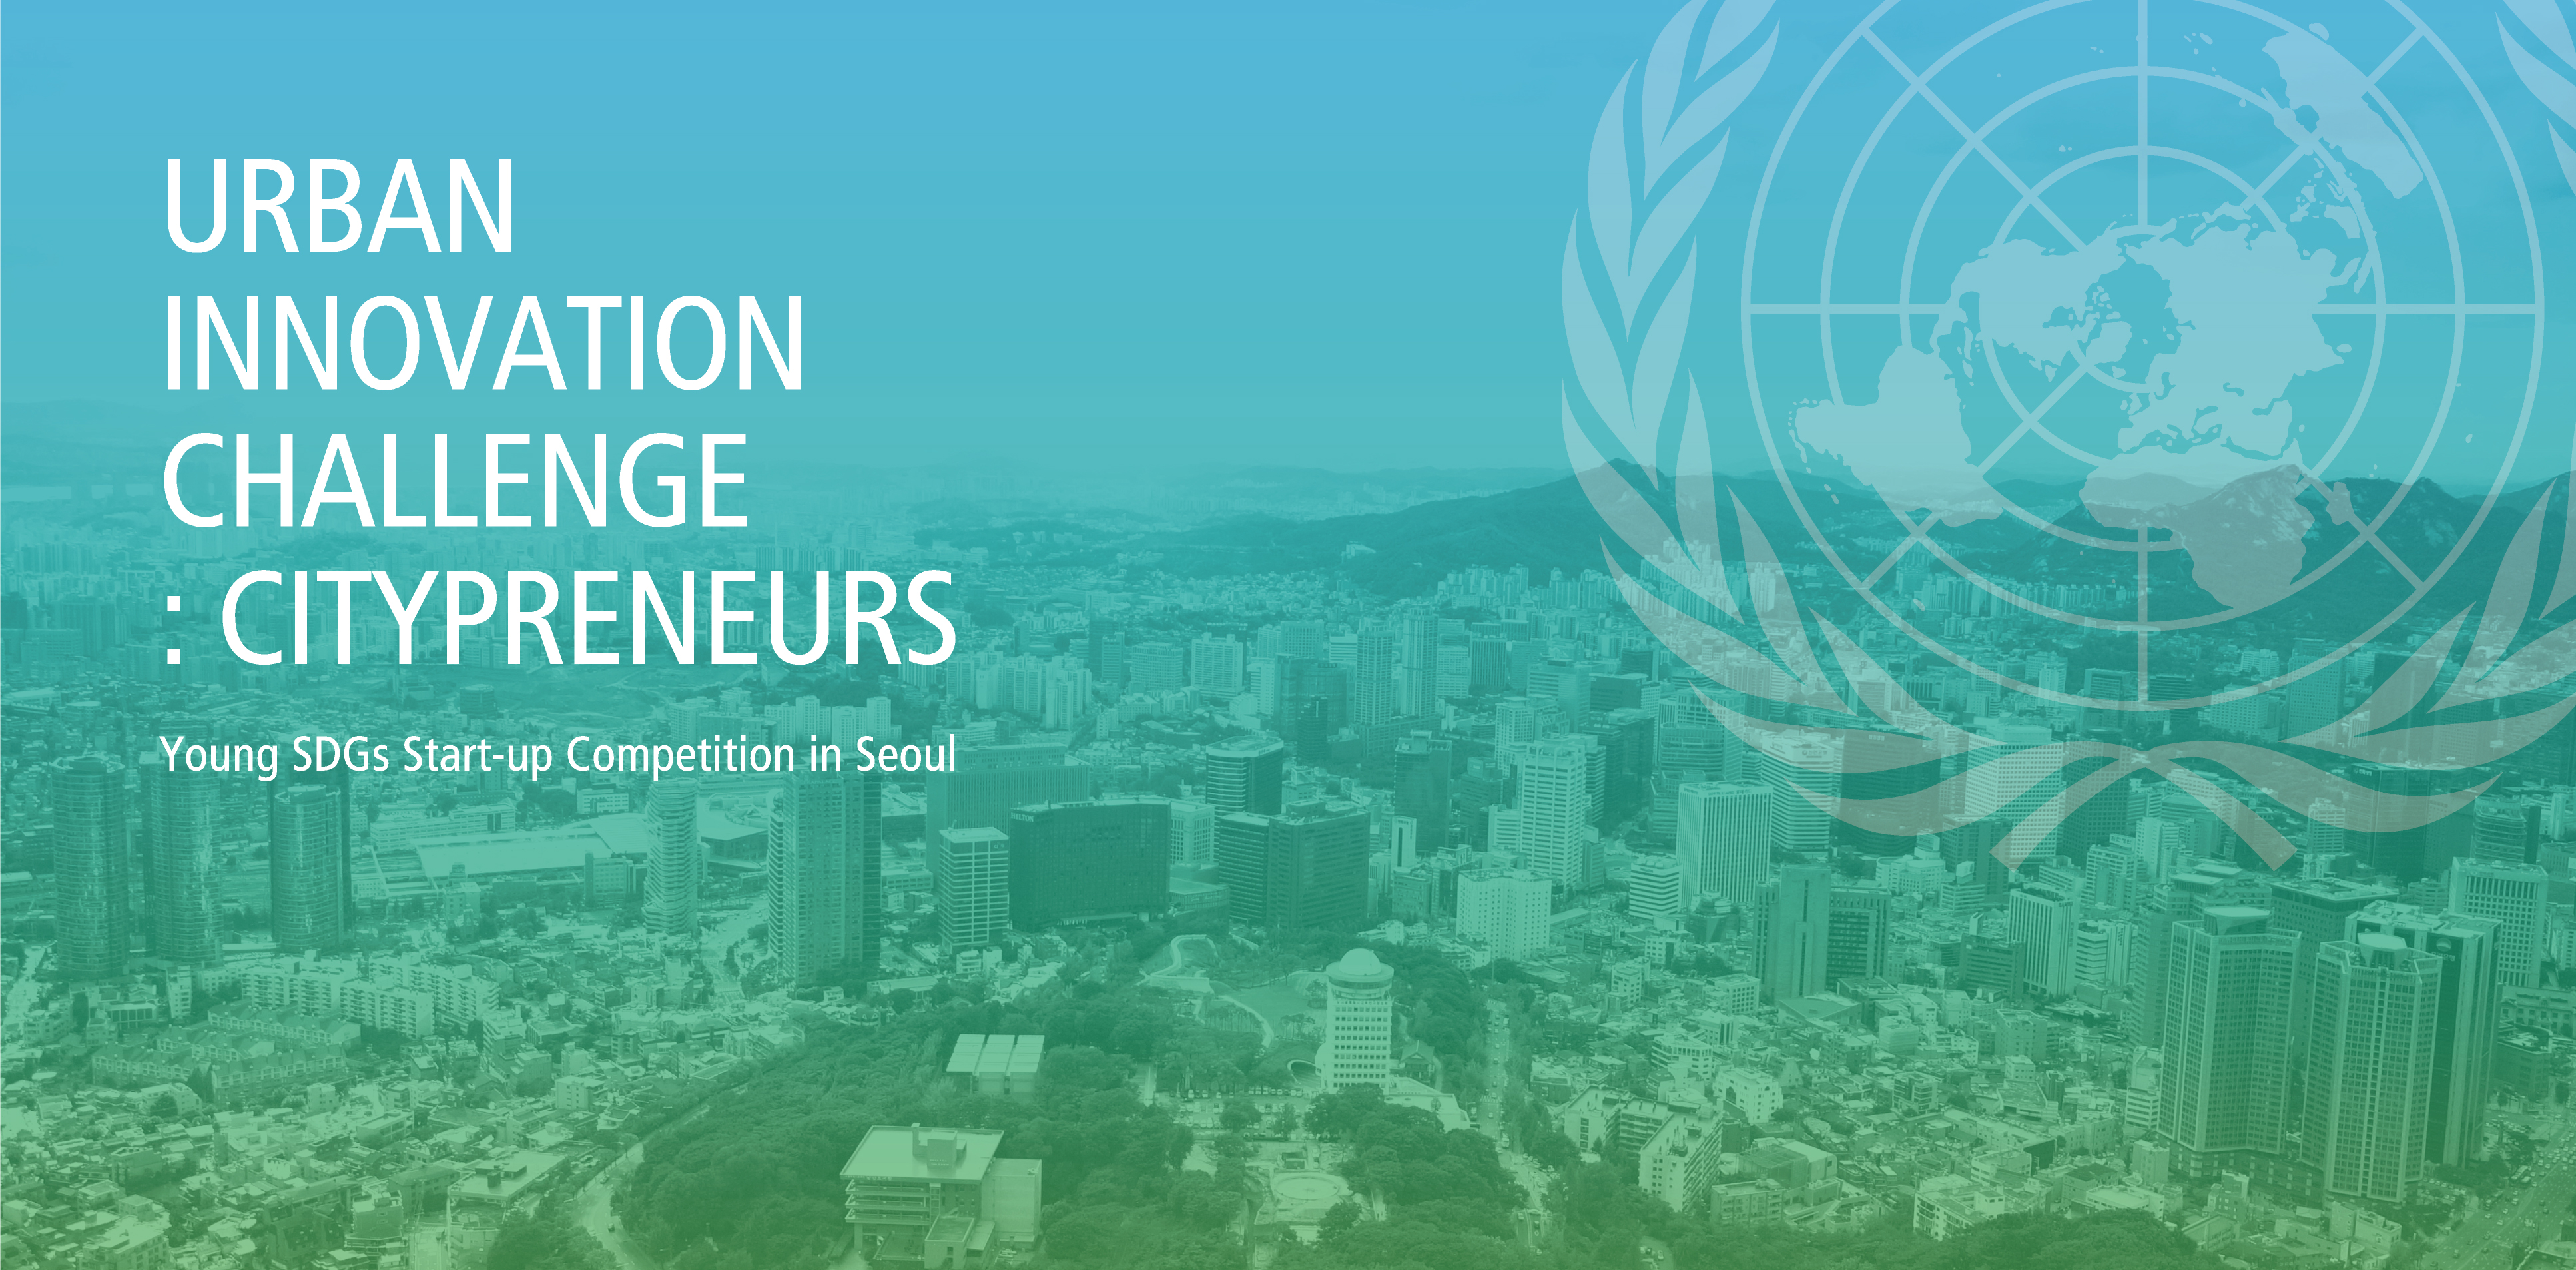 Urban Innovation Challenge: Citypreneurs Seoul 2019 (Funding available)